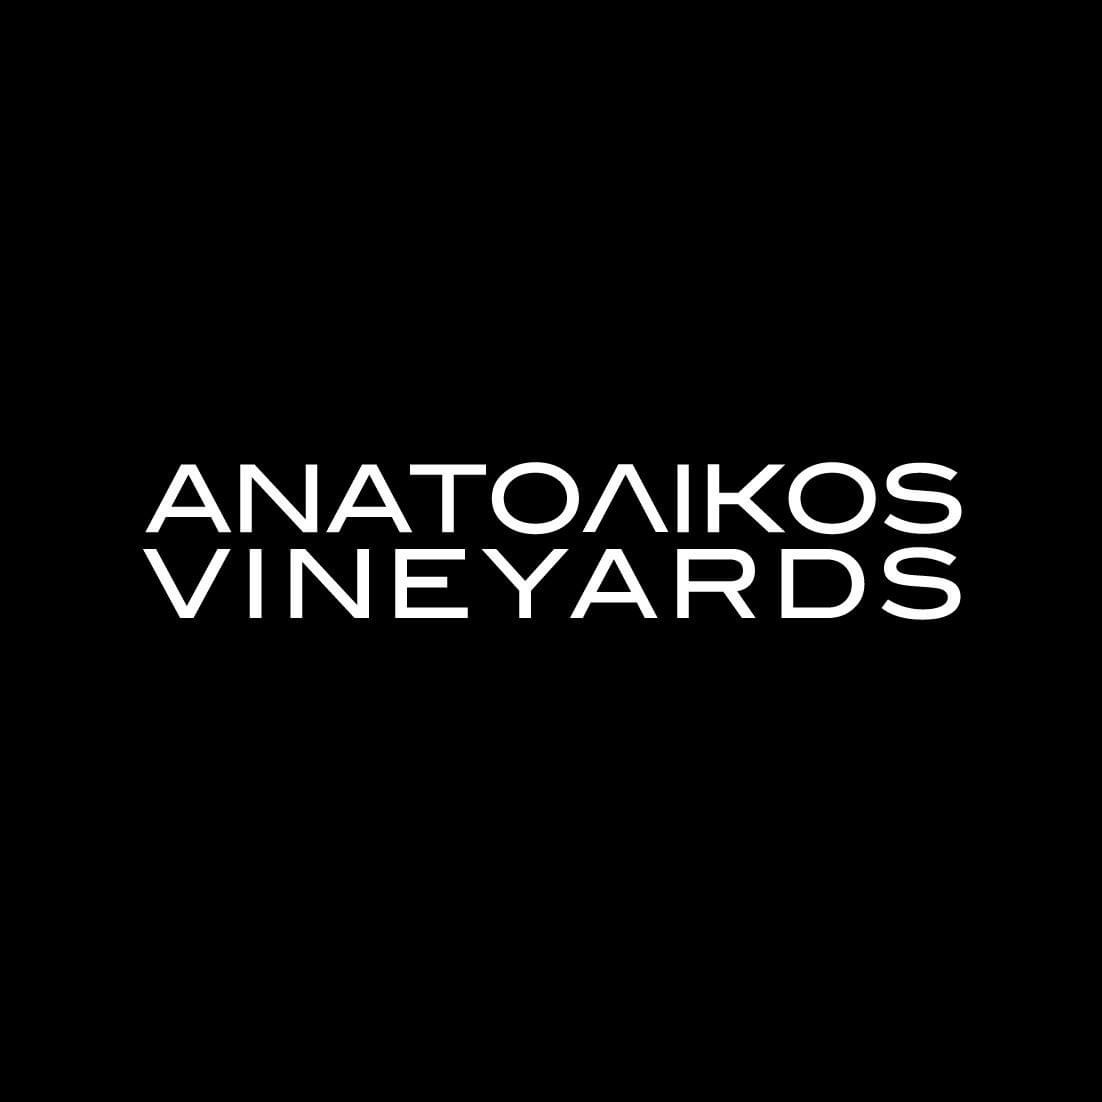 Anatolikos vineyards